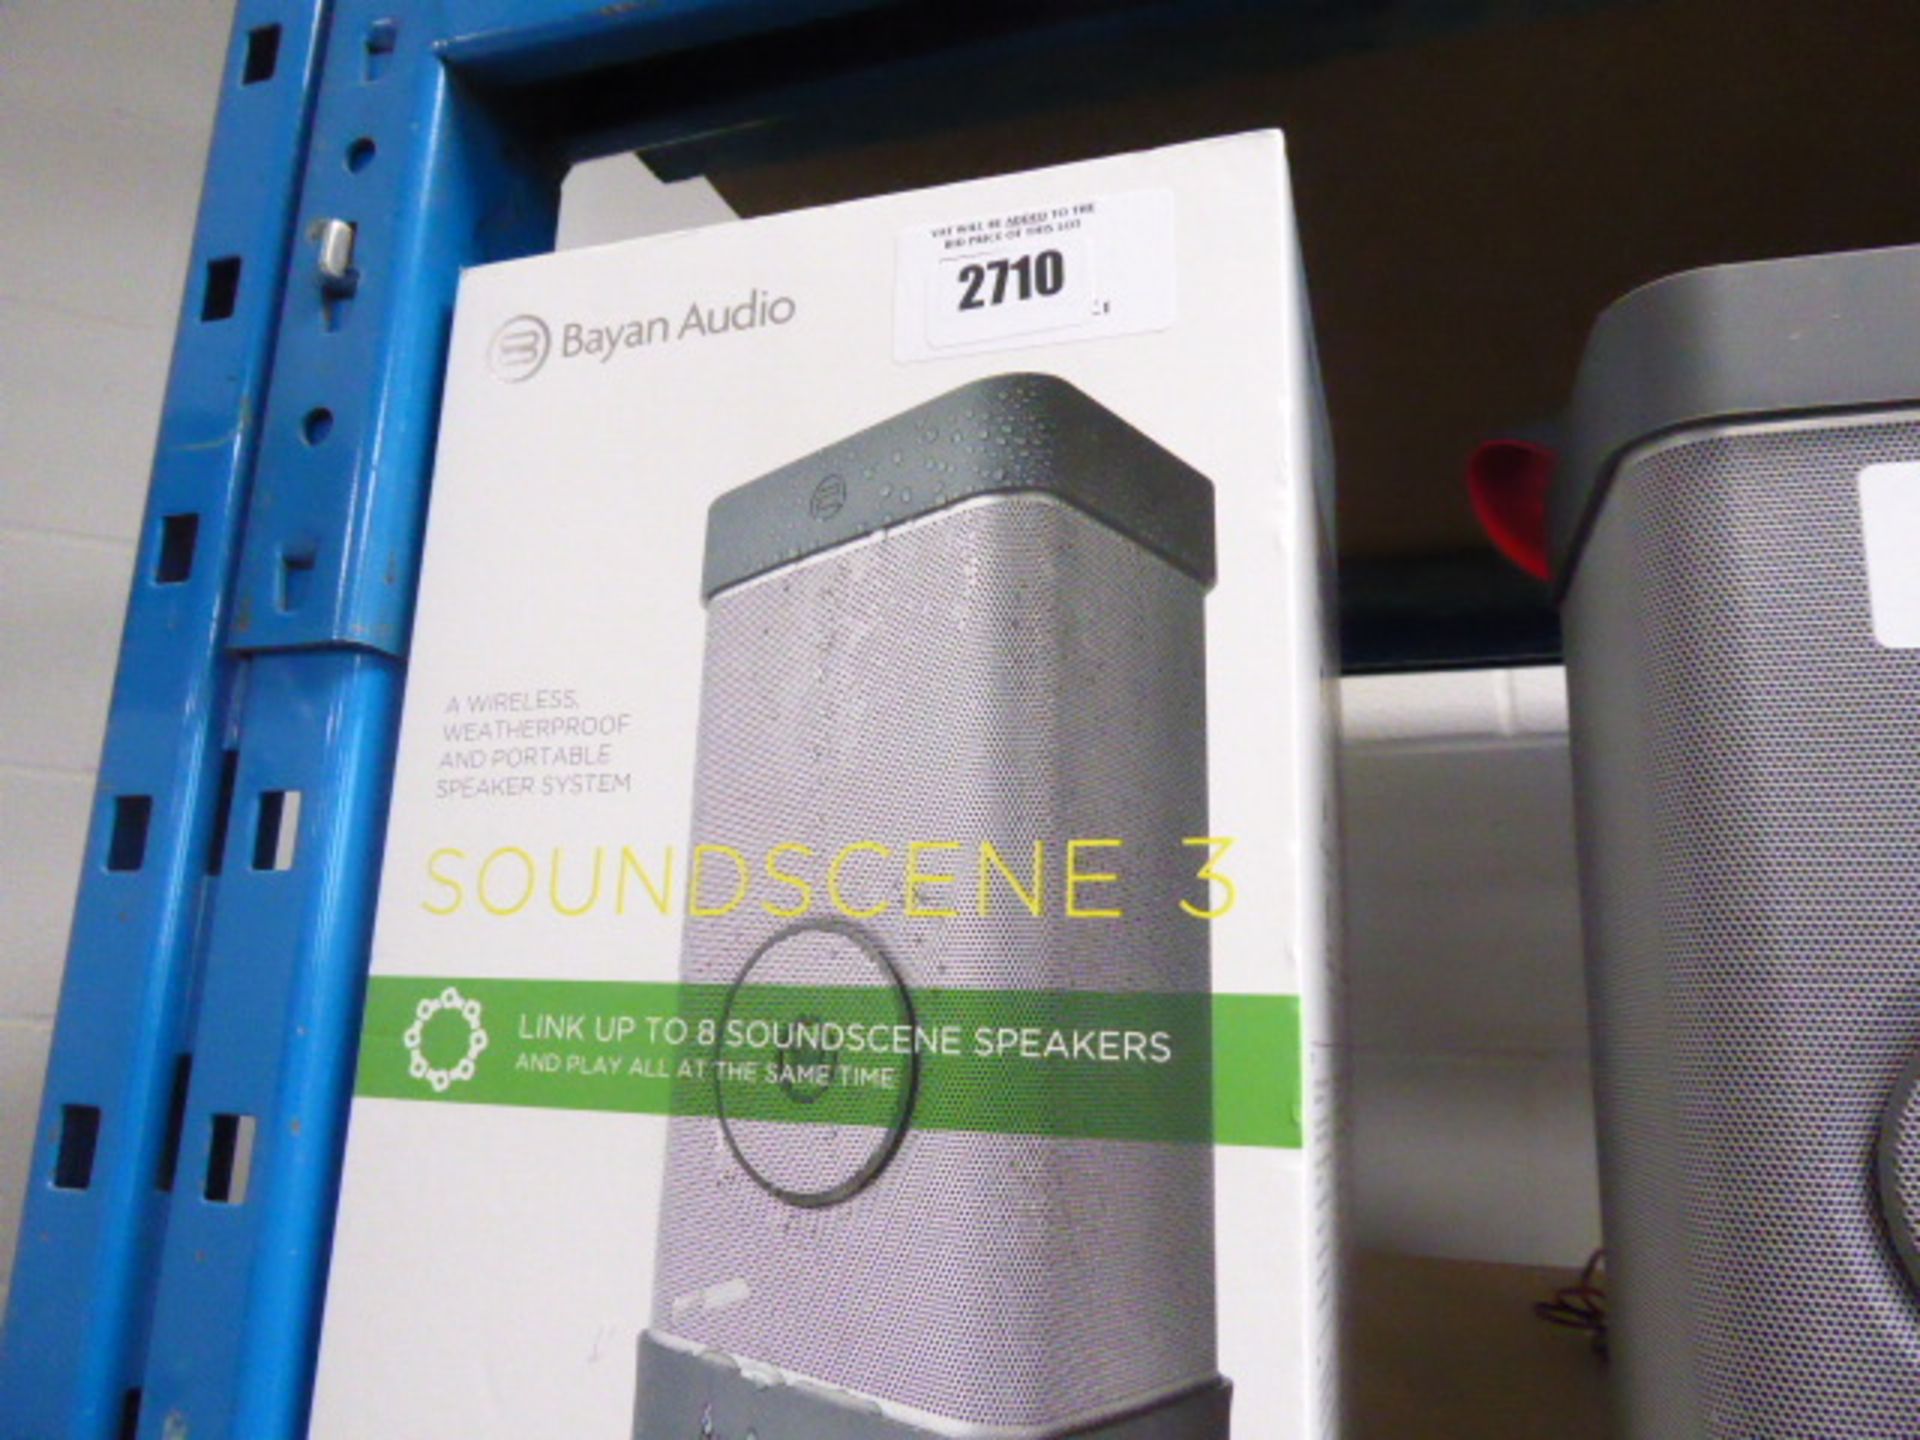 Bayan Audio Sound Scene 3 bluetooth speaker in box